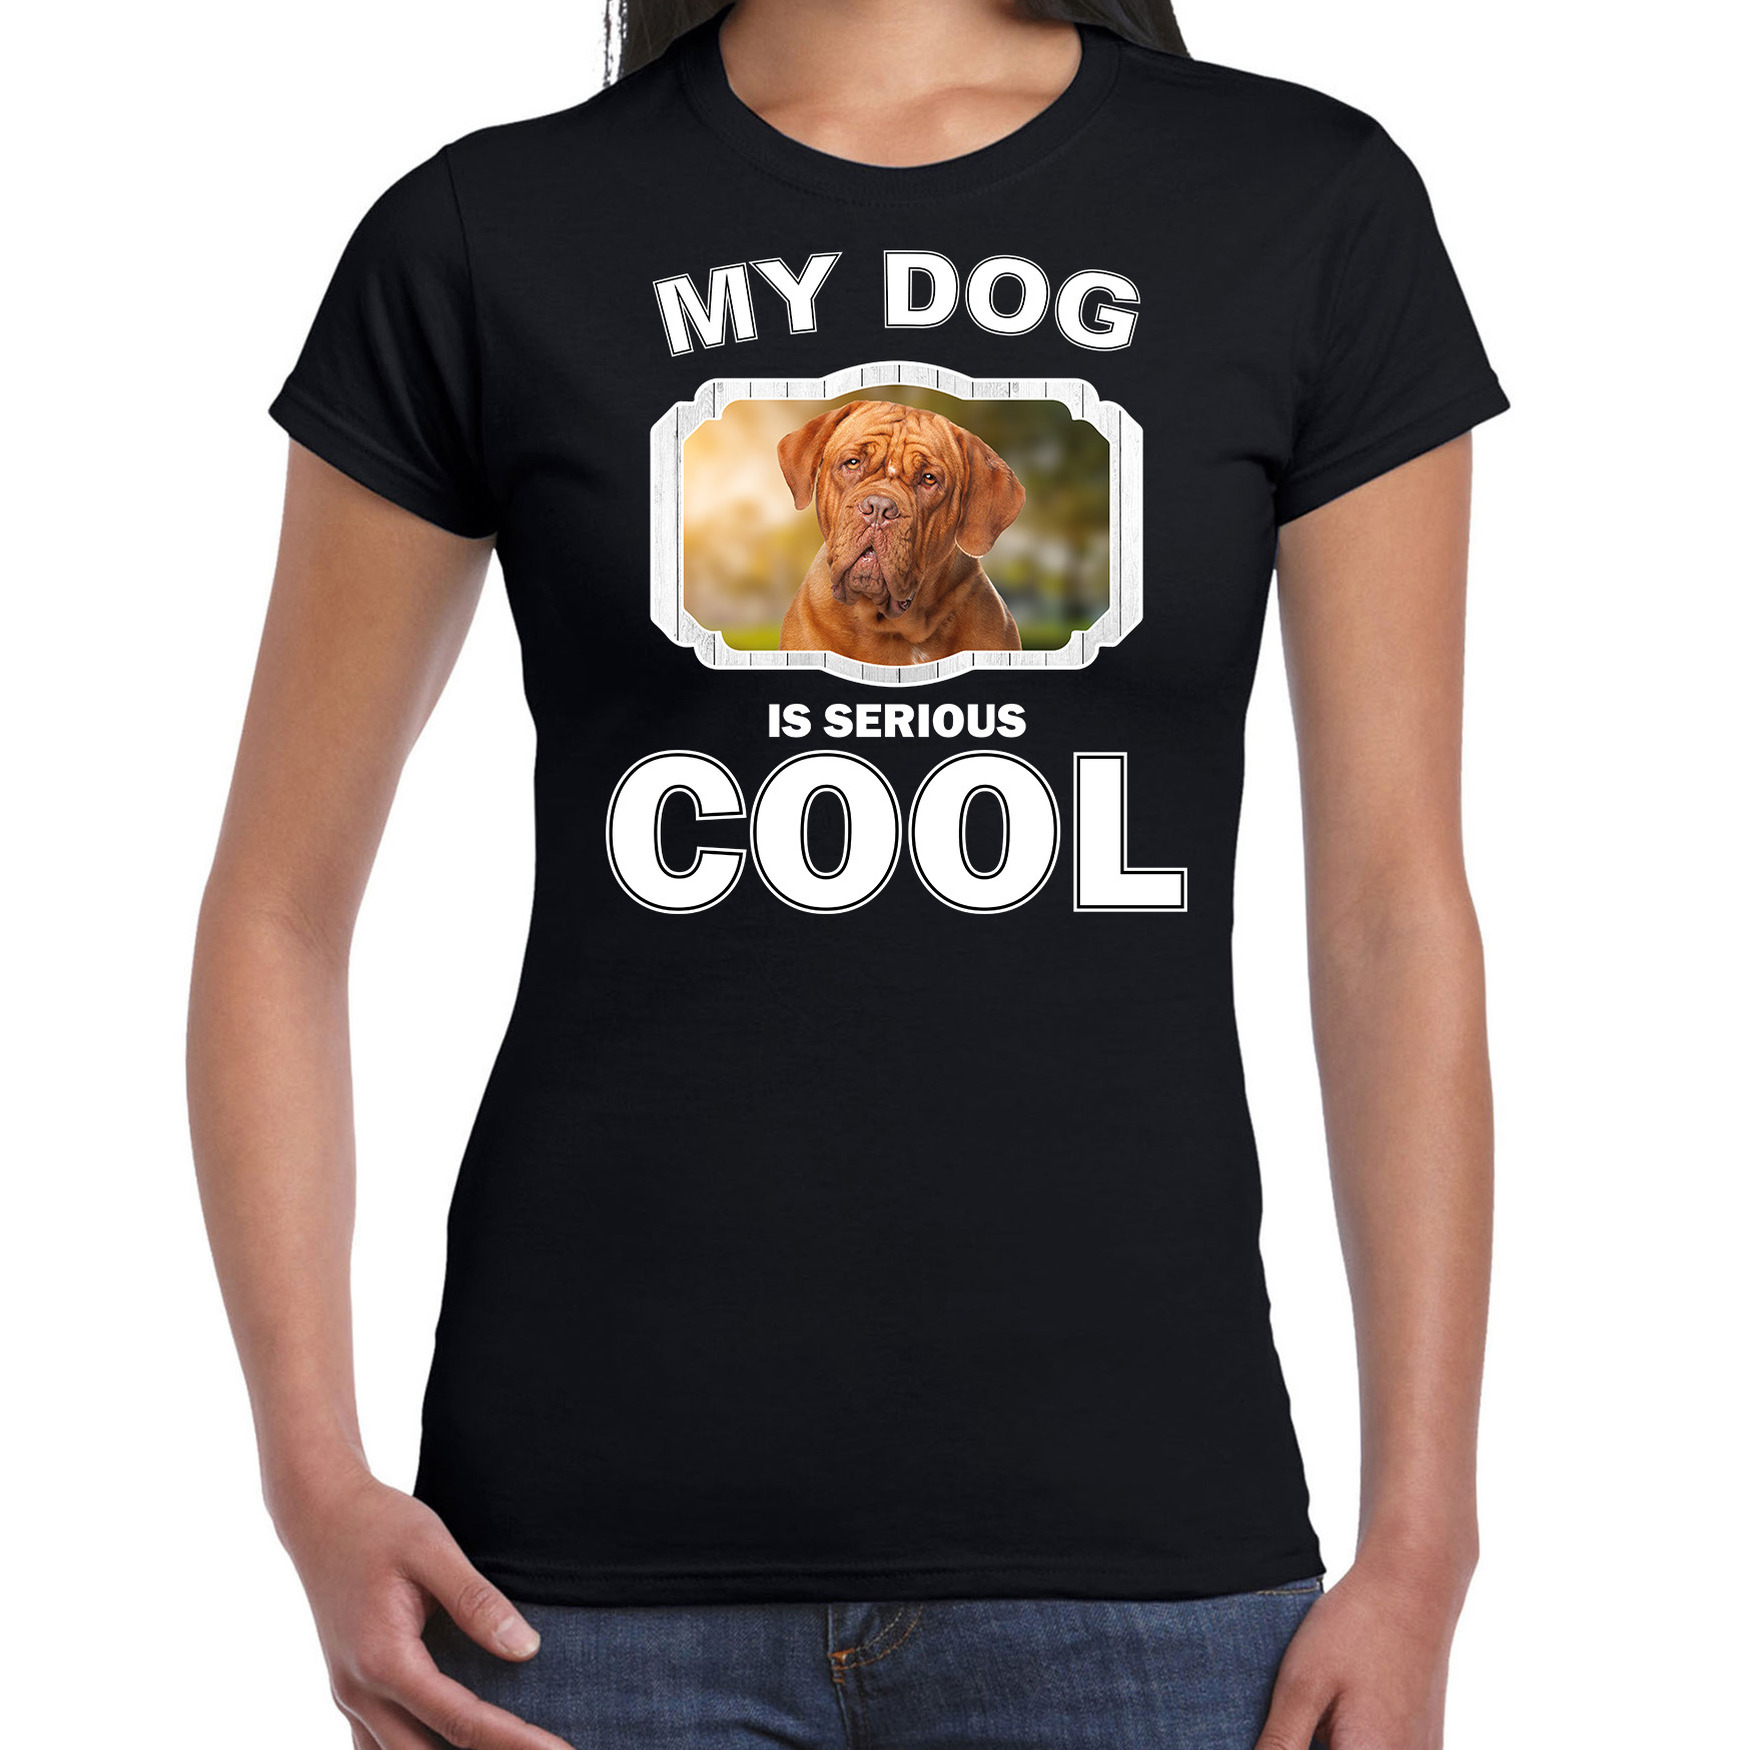 Franse mastiff honden t-shirt my dog is serious cool zwart voor dames